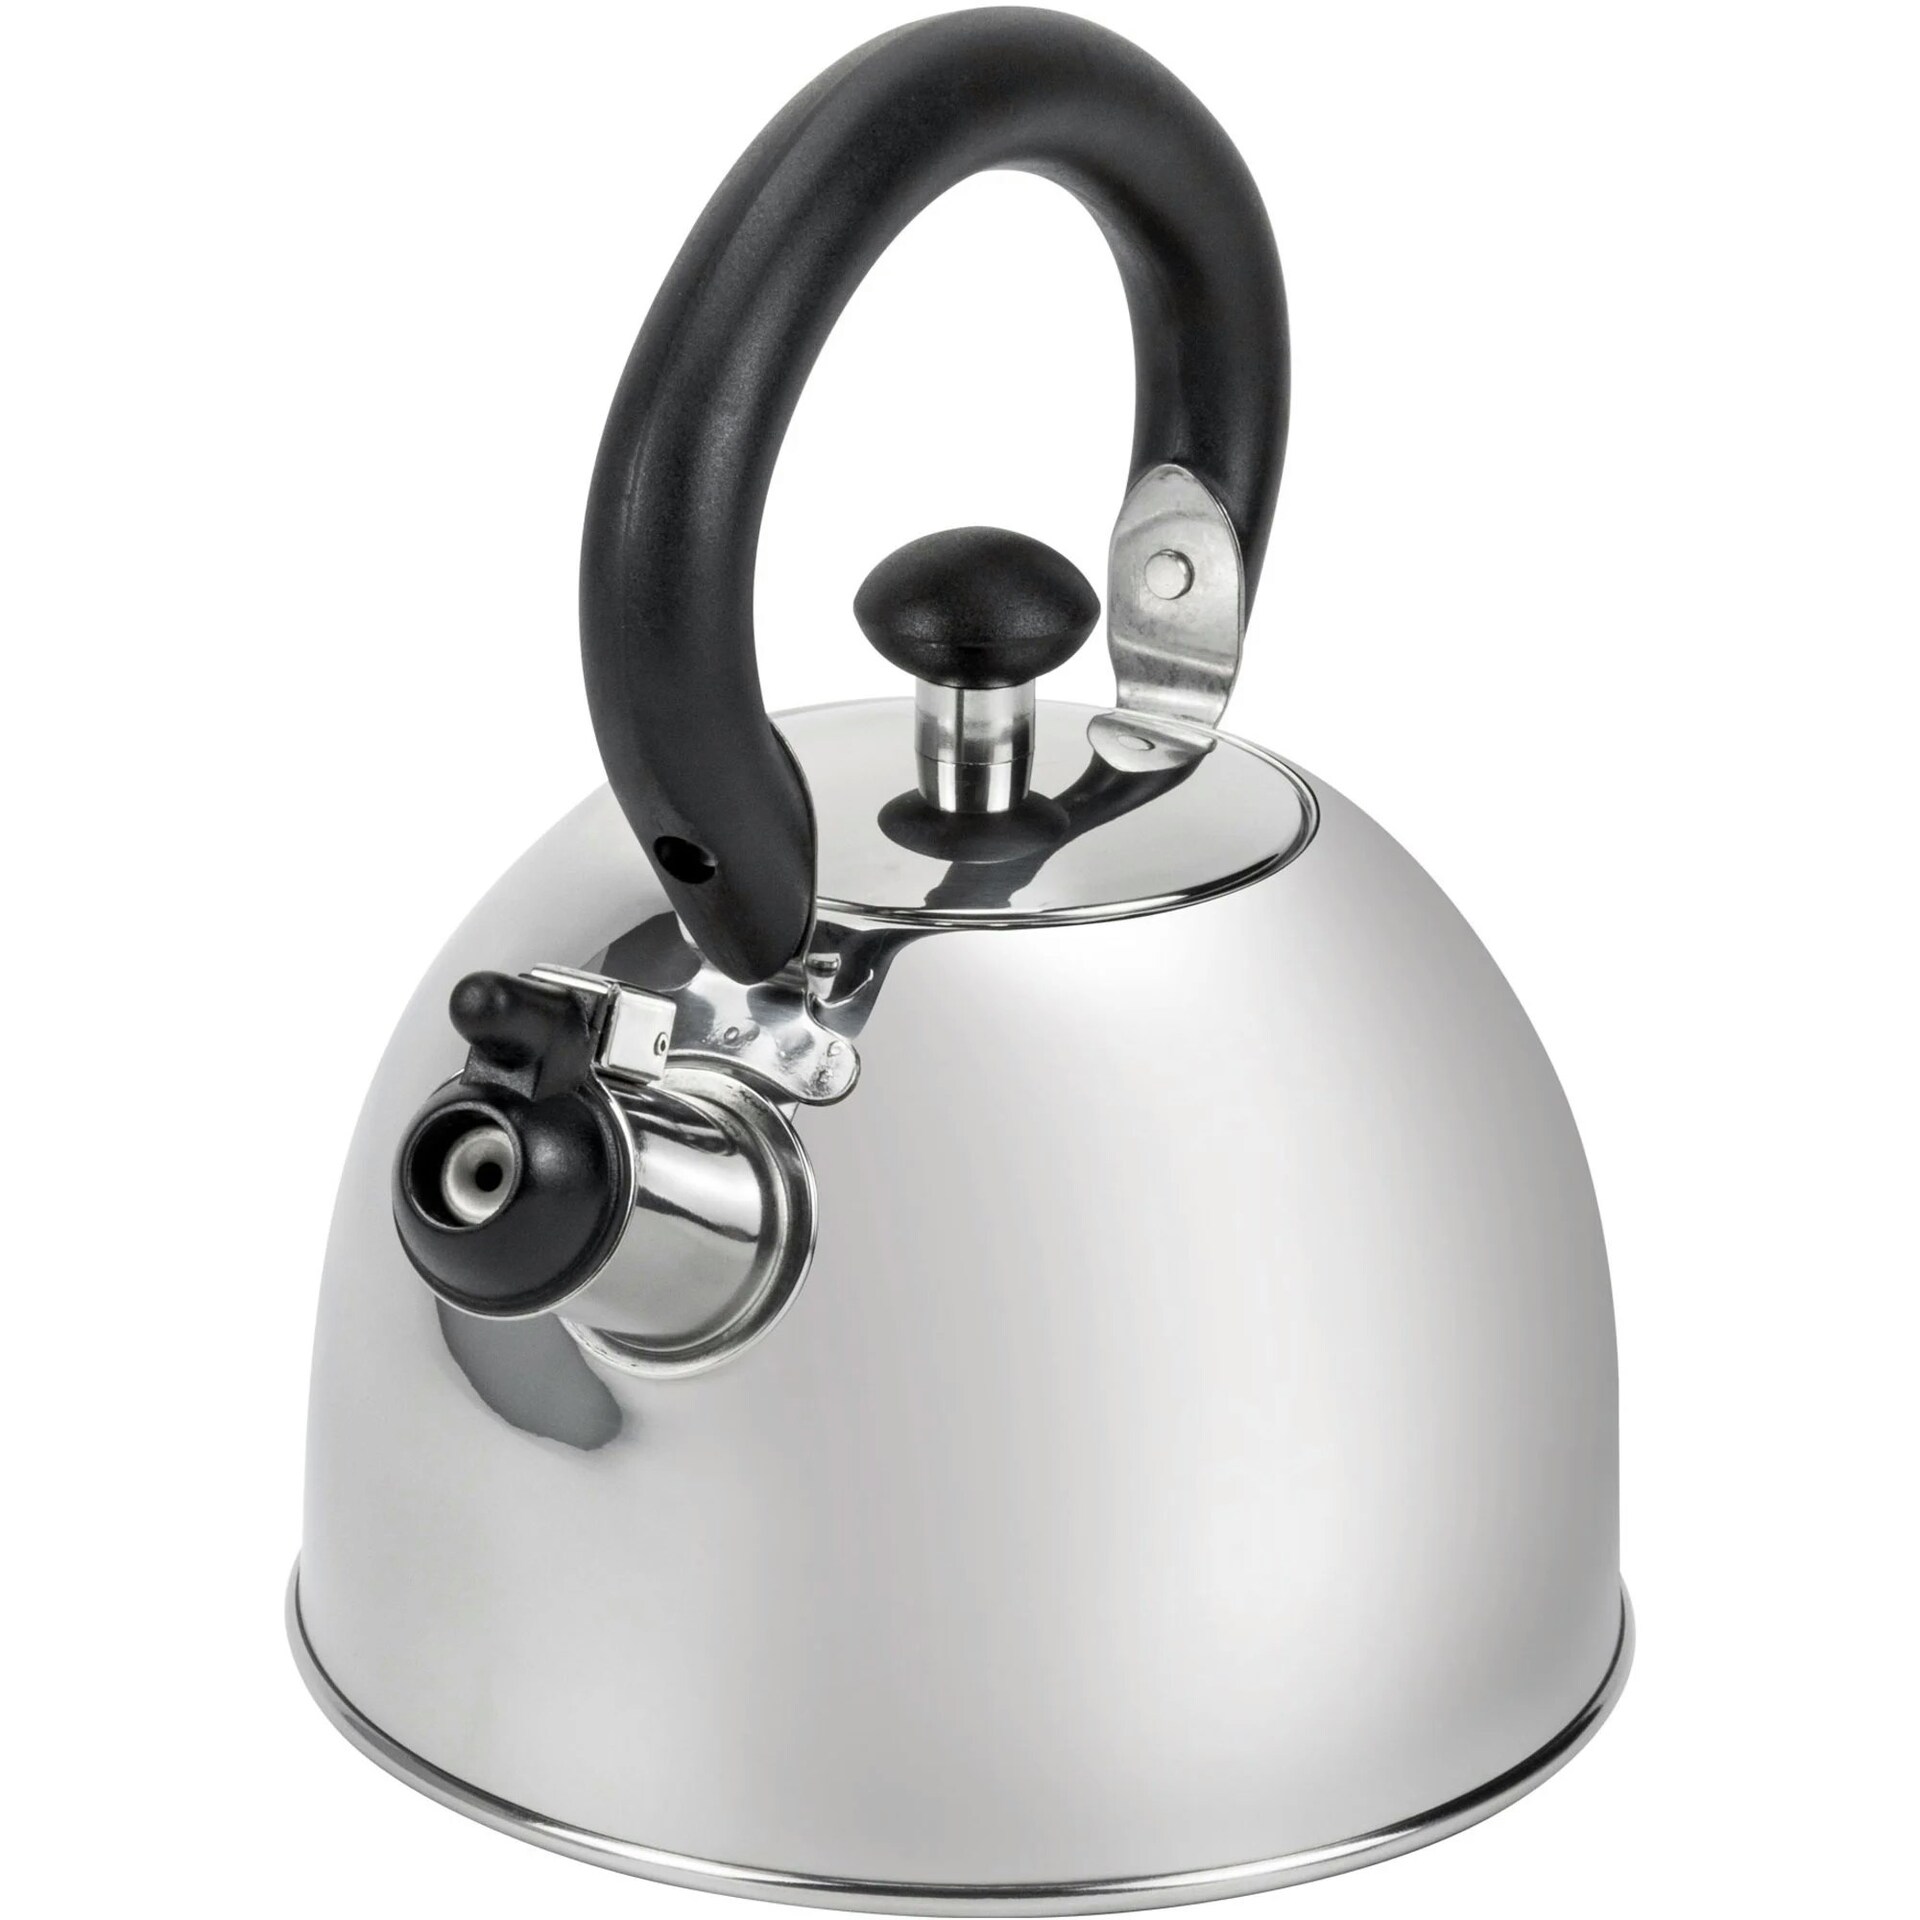 https://royaldesign.com/image/2/mareld-mareld-water-kettle-s-s-20l-0